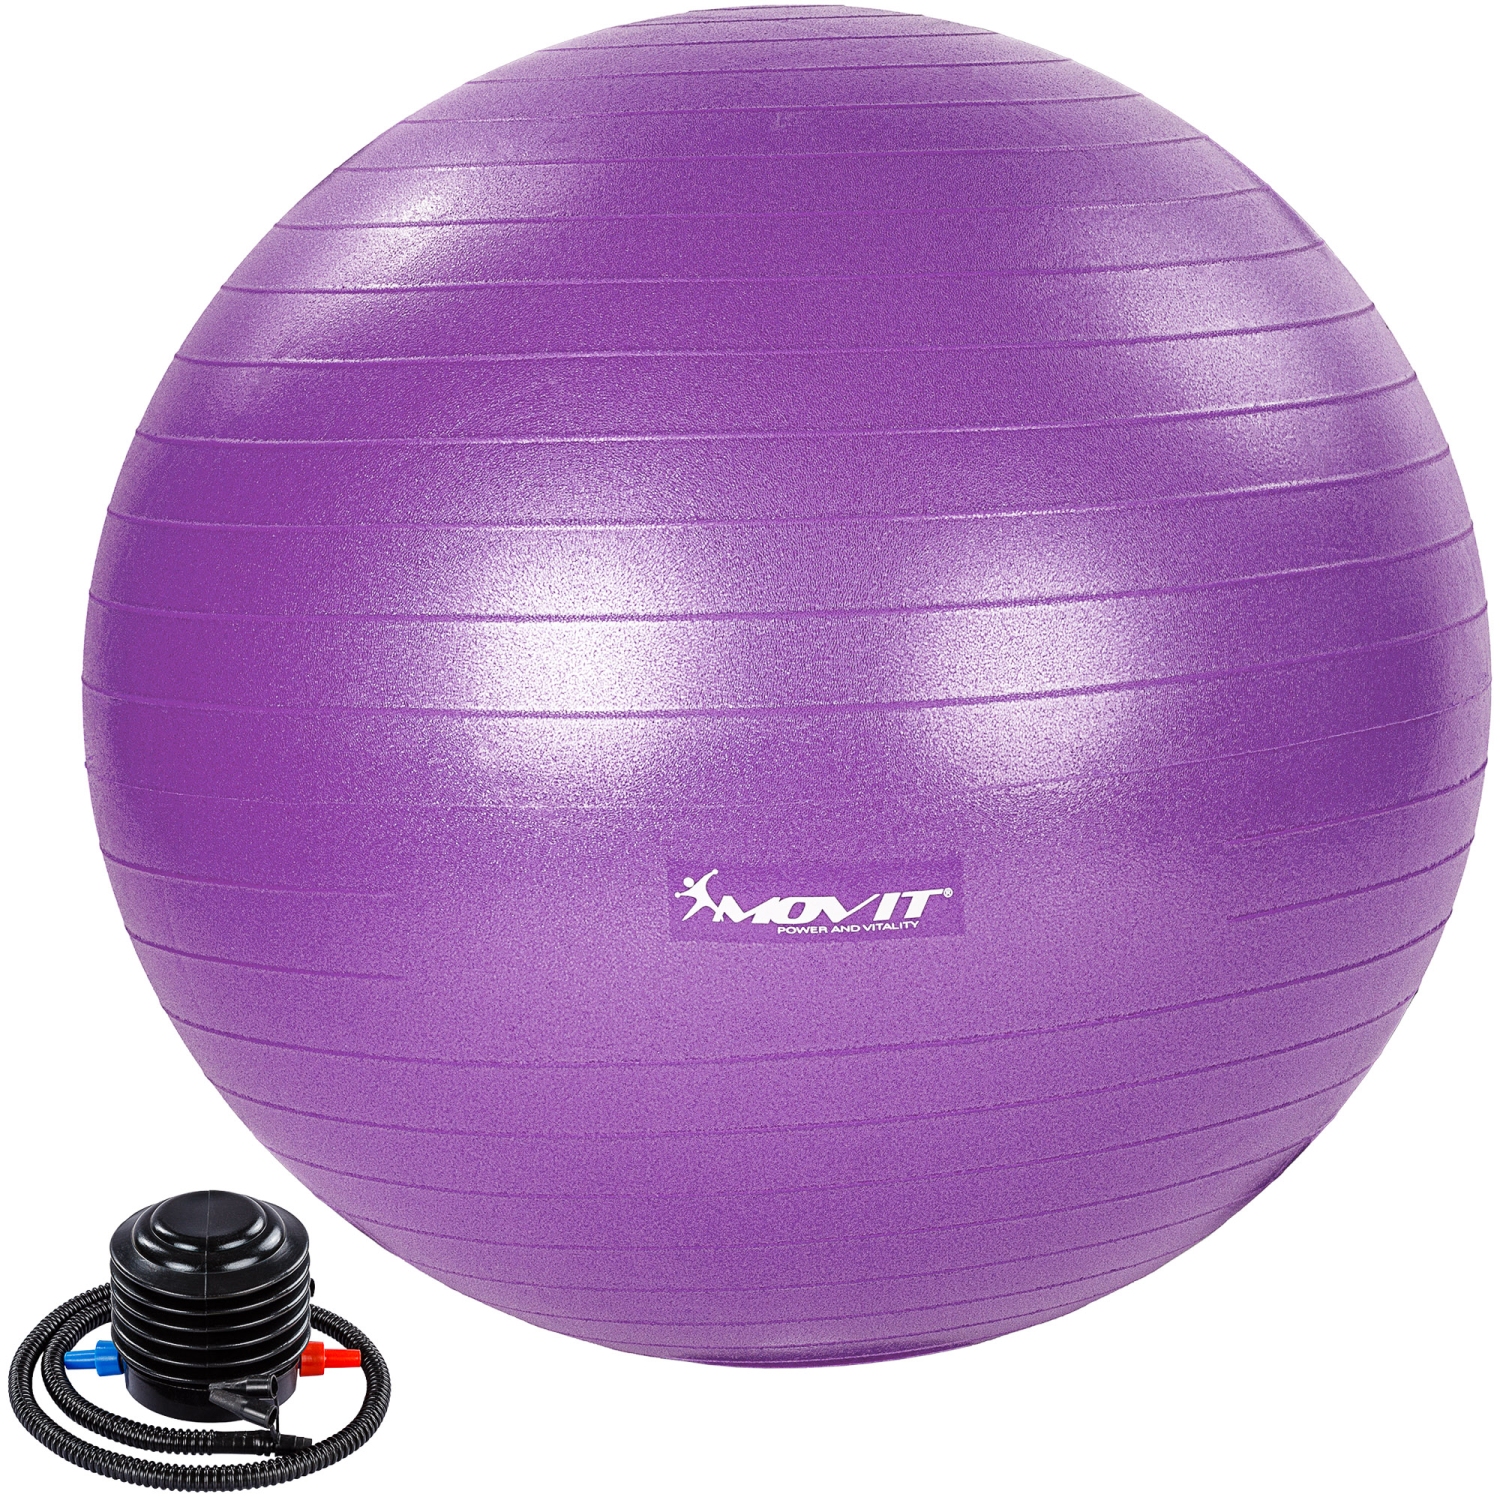 Yoga bal – Pilates bal – Fitness bal – 85 cm – Inclusief pomp – Paars